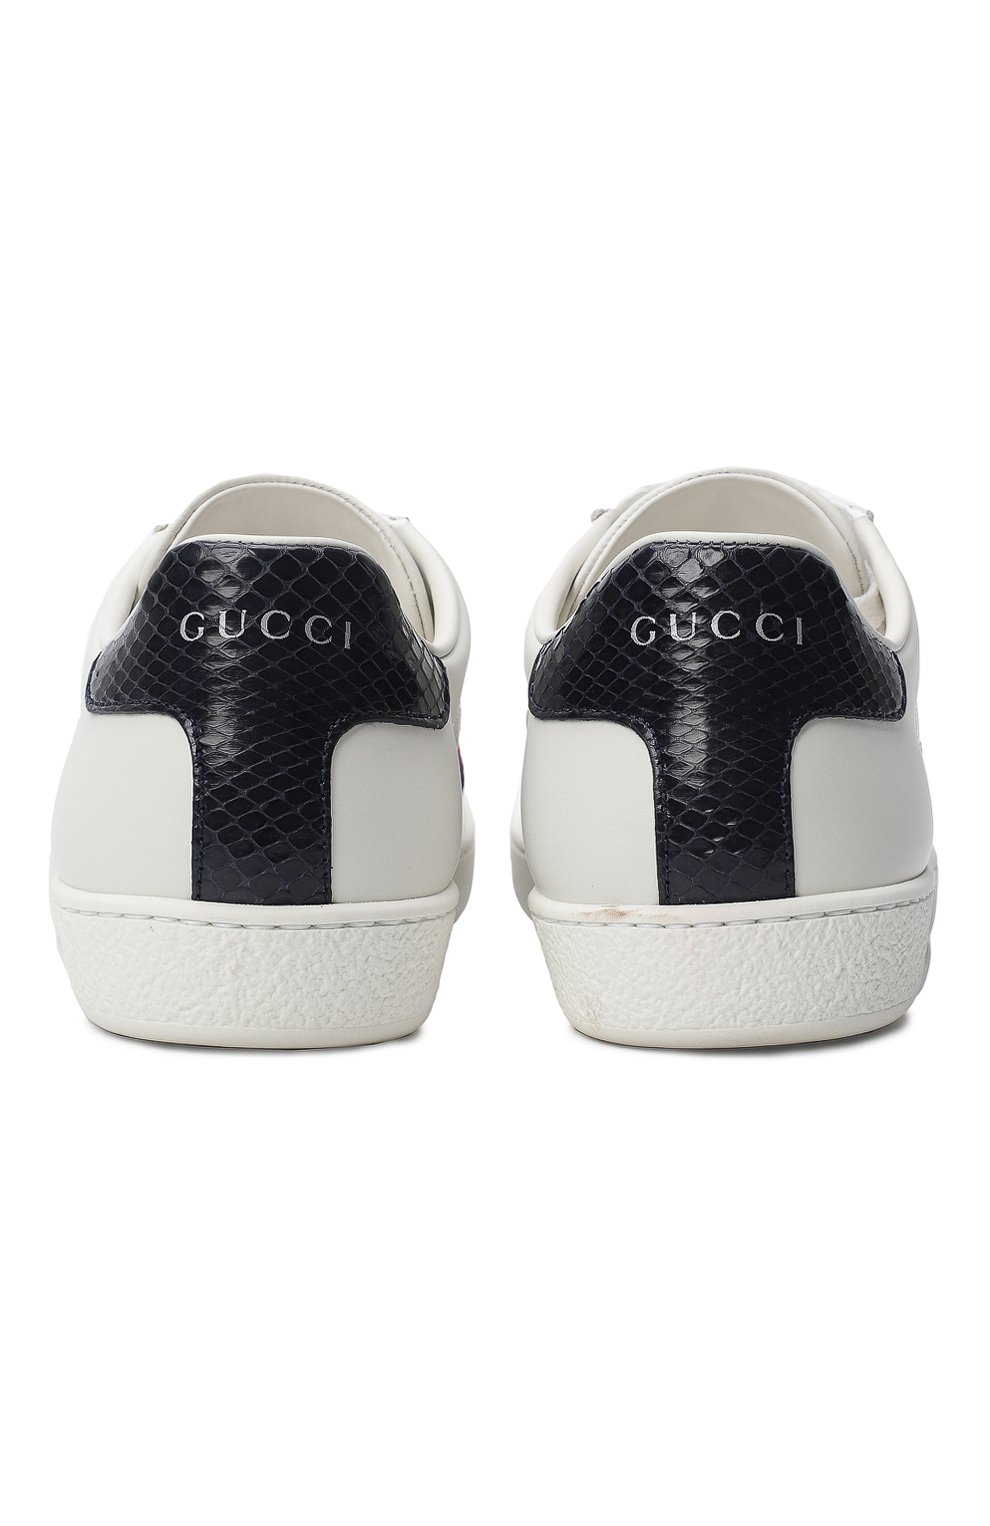 Кожаные кеды Ace | Gucci | Белый - 3